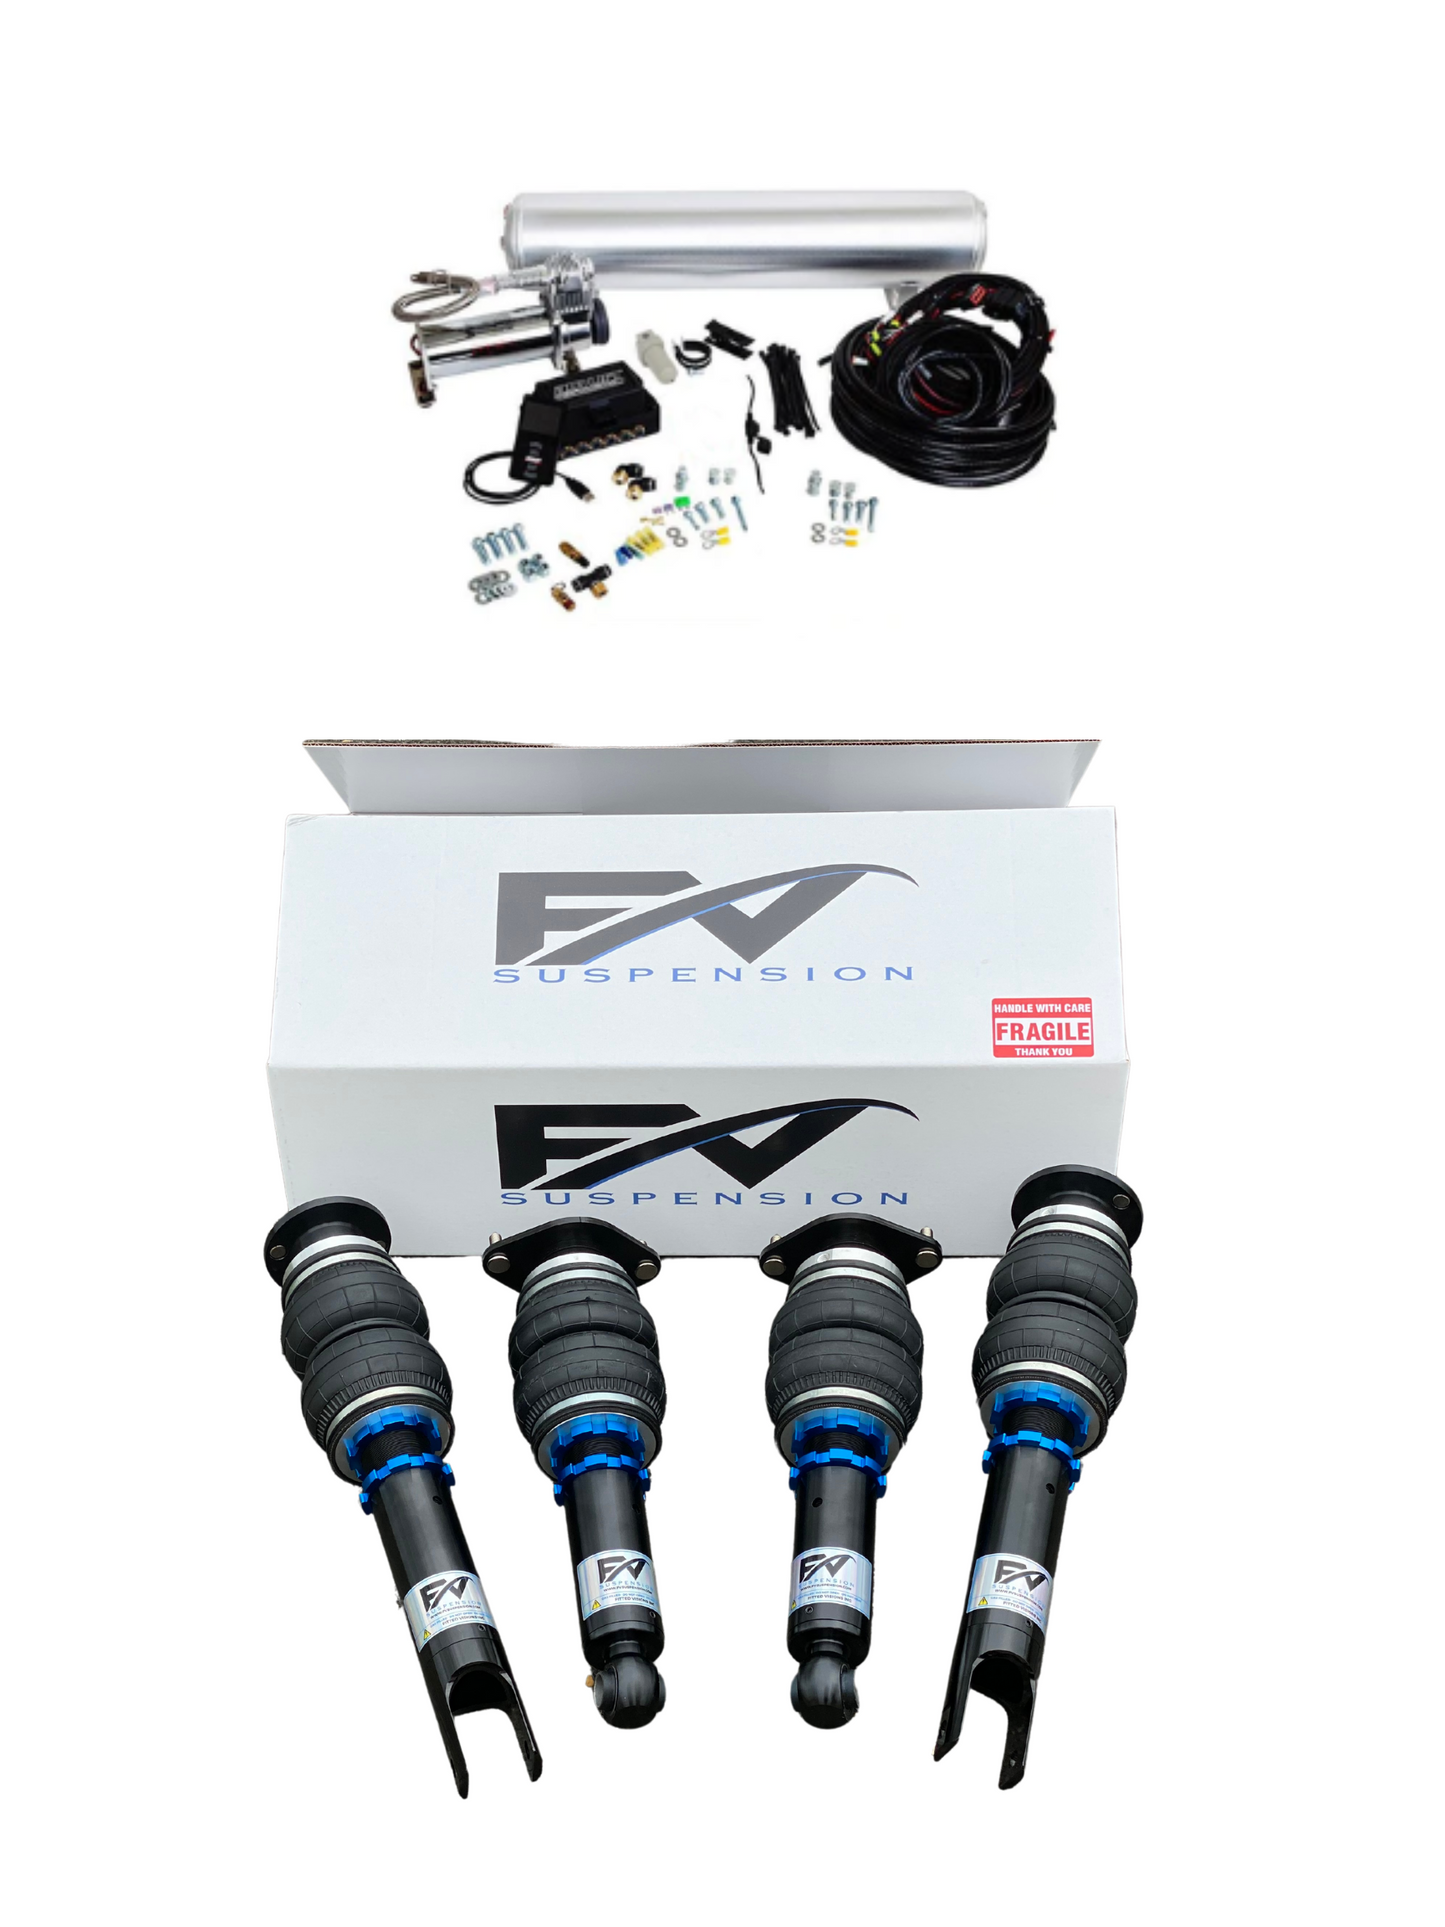 FV Suspension 3P Tier 2 Complete Air Ride kit for 99-02 Nissan Silvia - FVALtier2kit537